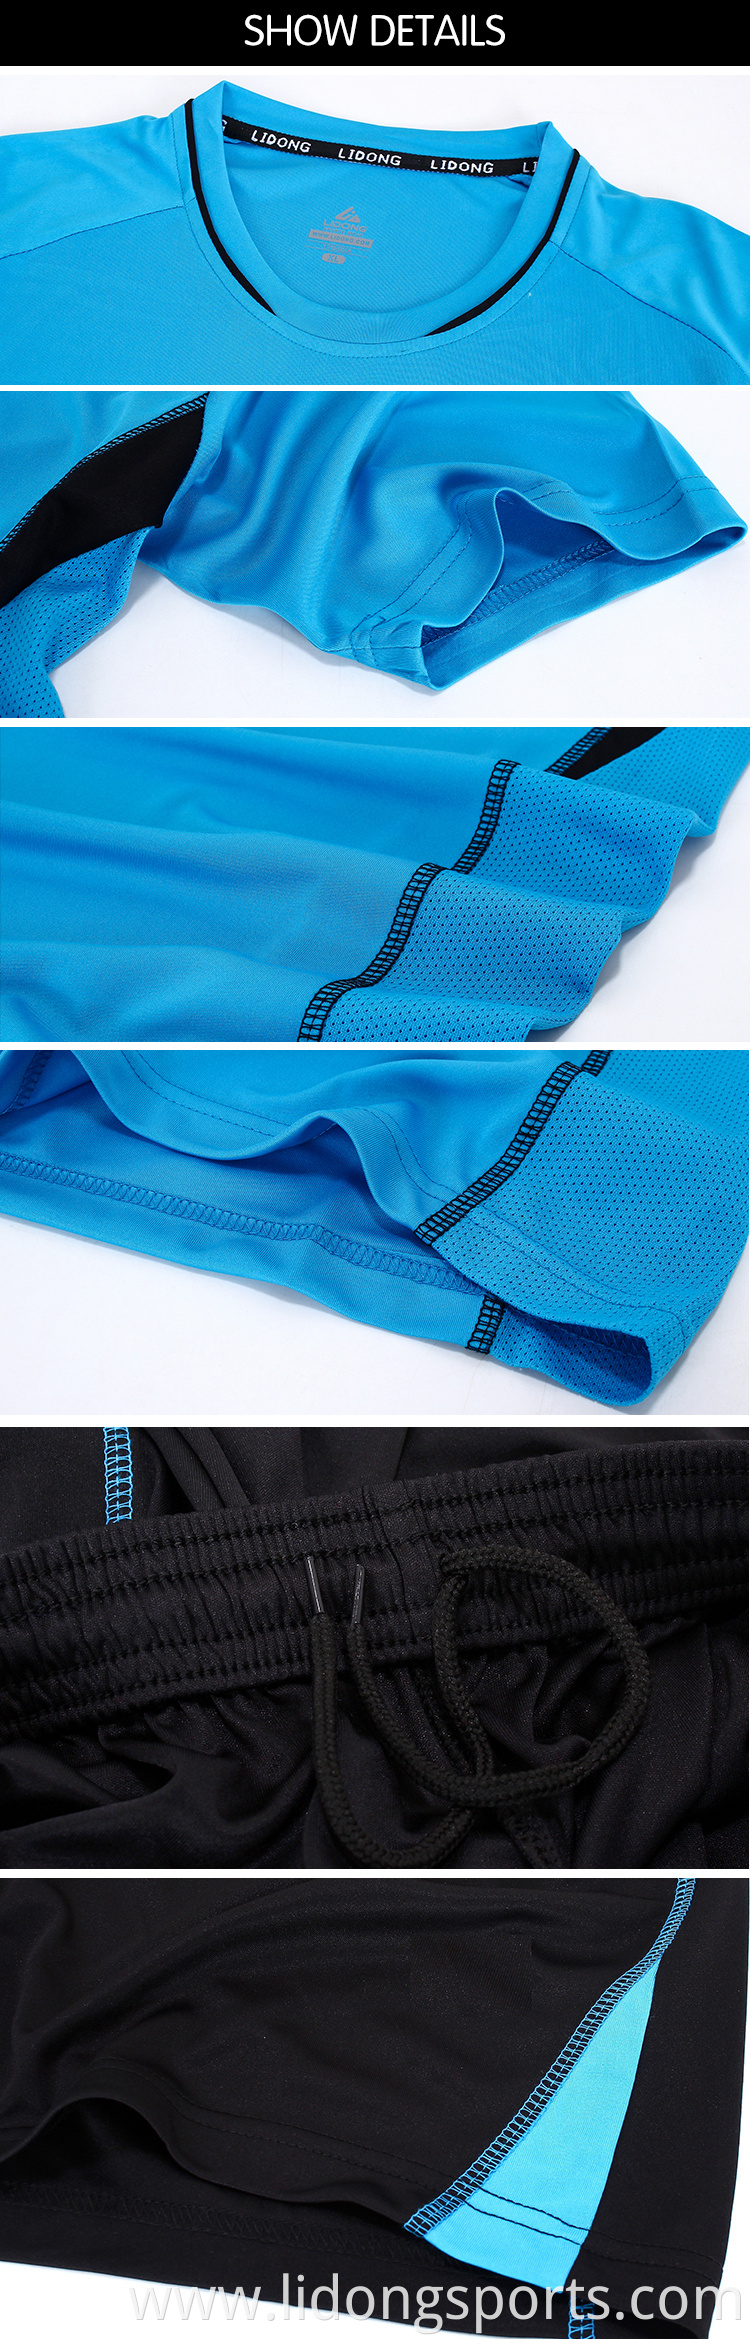 Lidong Custom Blue Sport Soccer Jersey Set/Blank Sublimated Football Jersey New Model